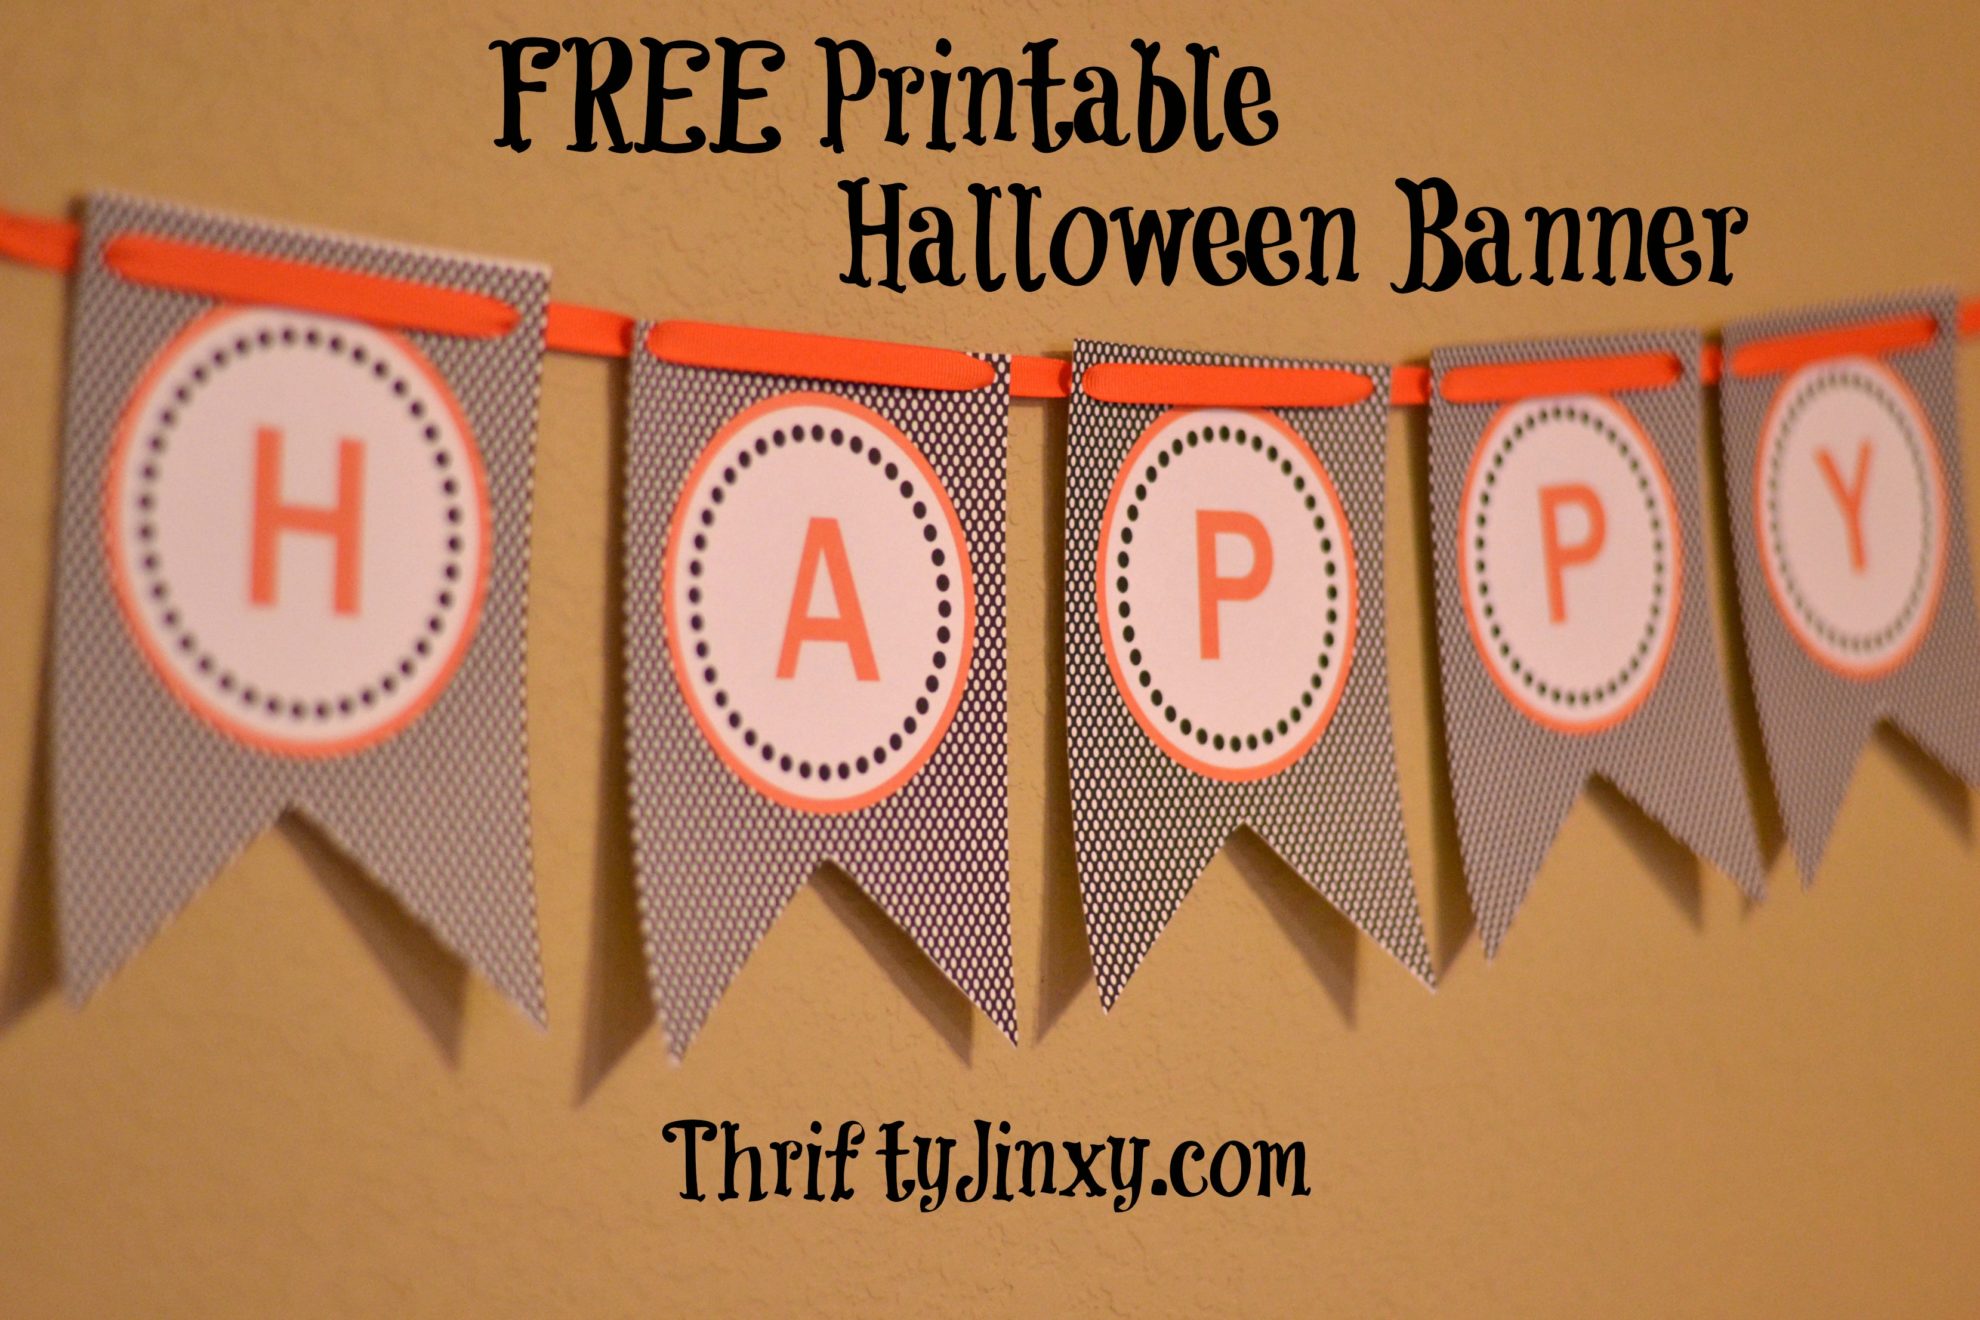 FREE Printable Halloween Banner Thrifty Jinxy